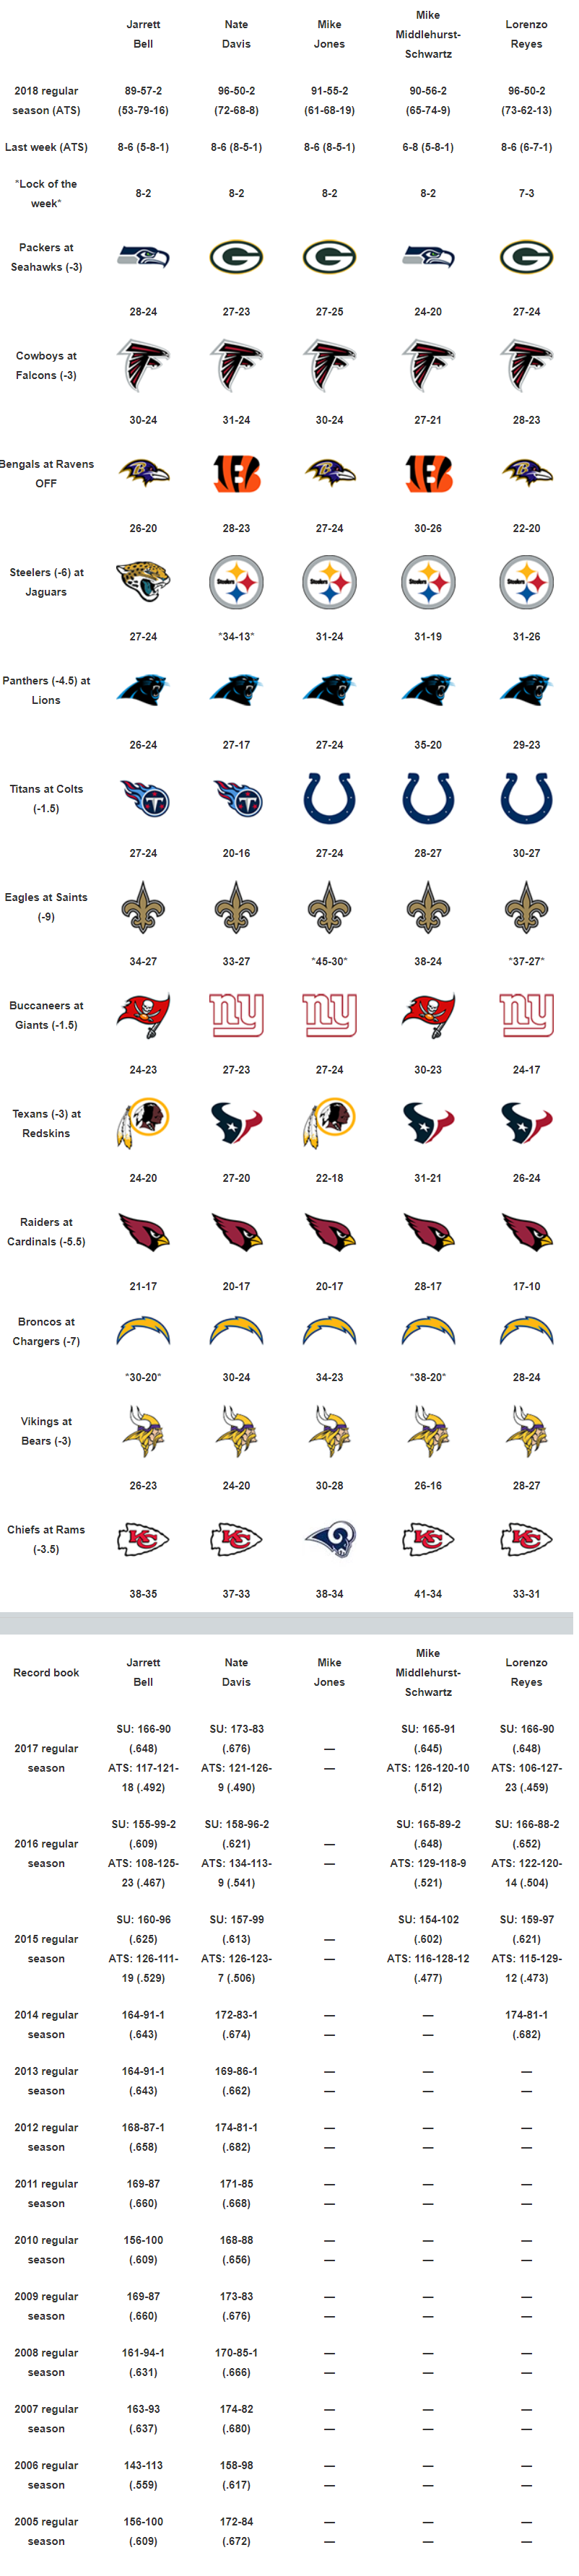 USA TODAY Week 11 NFL picks: Chiefs-Rams, Pack-Seahawks split opinions